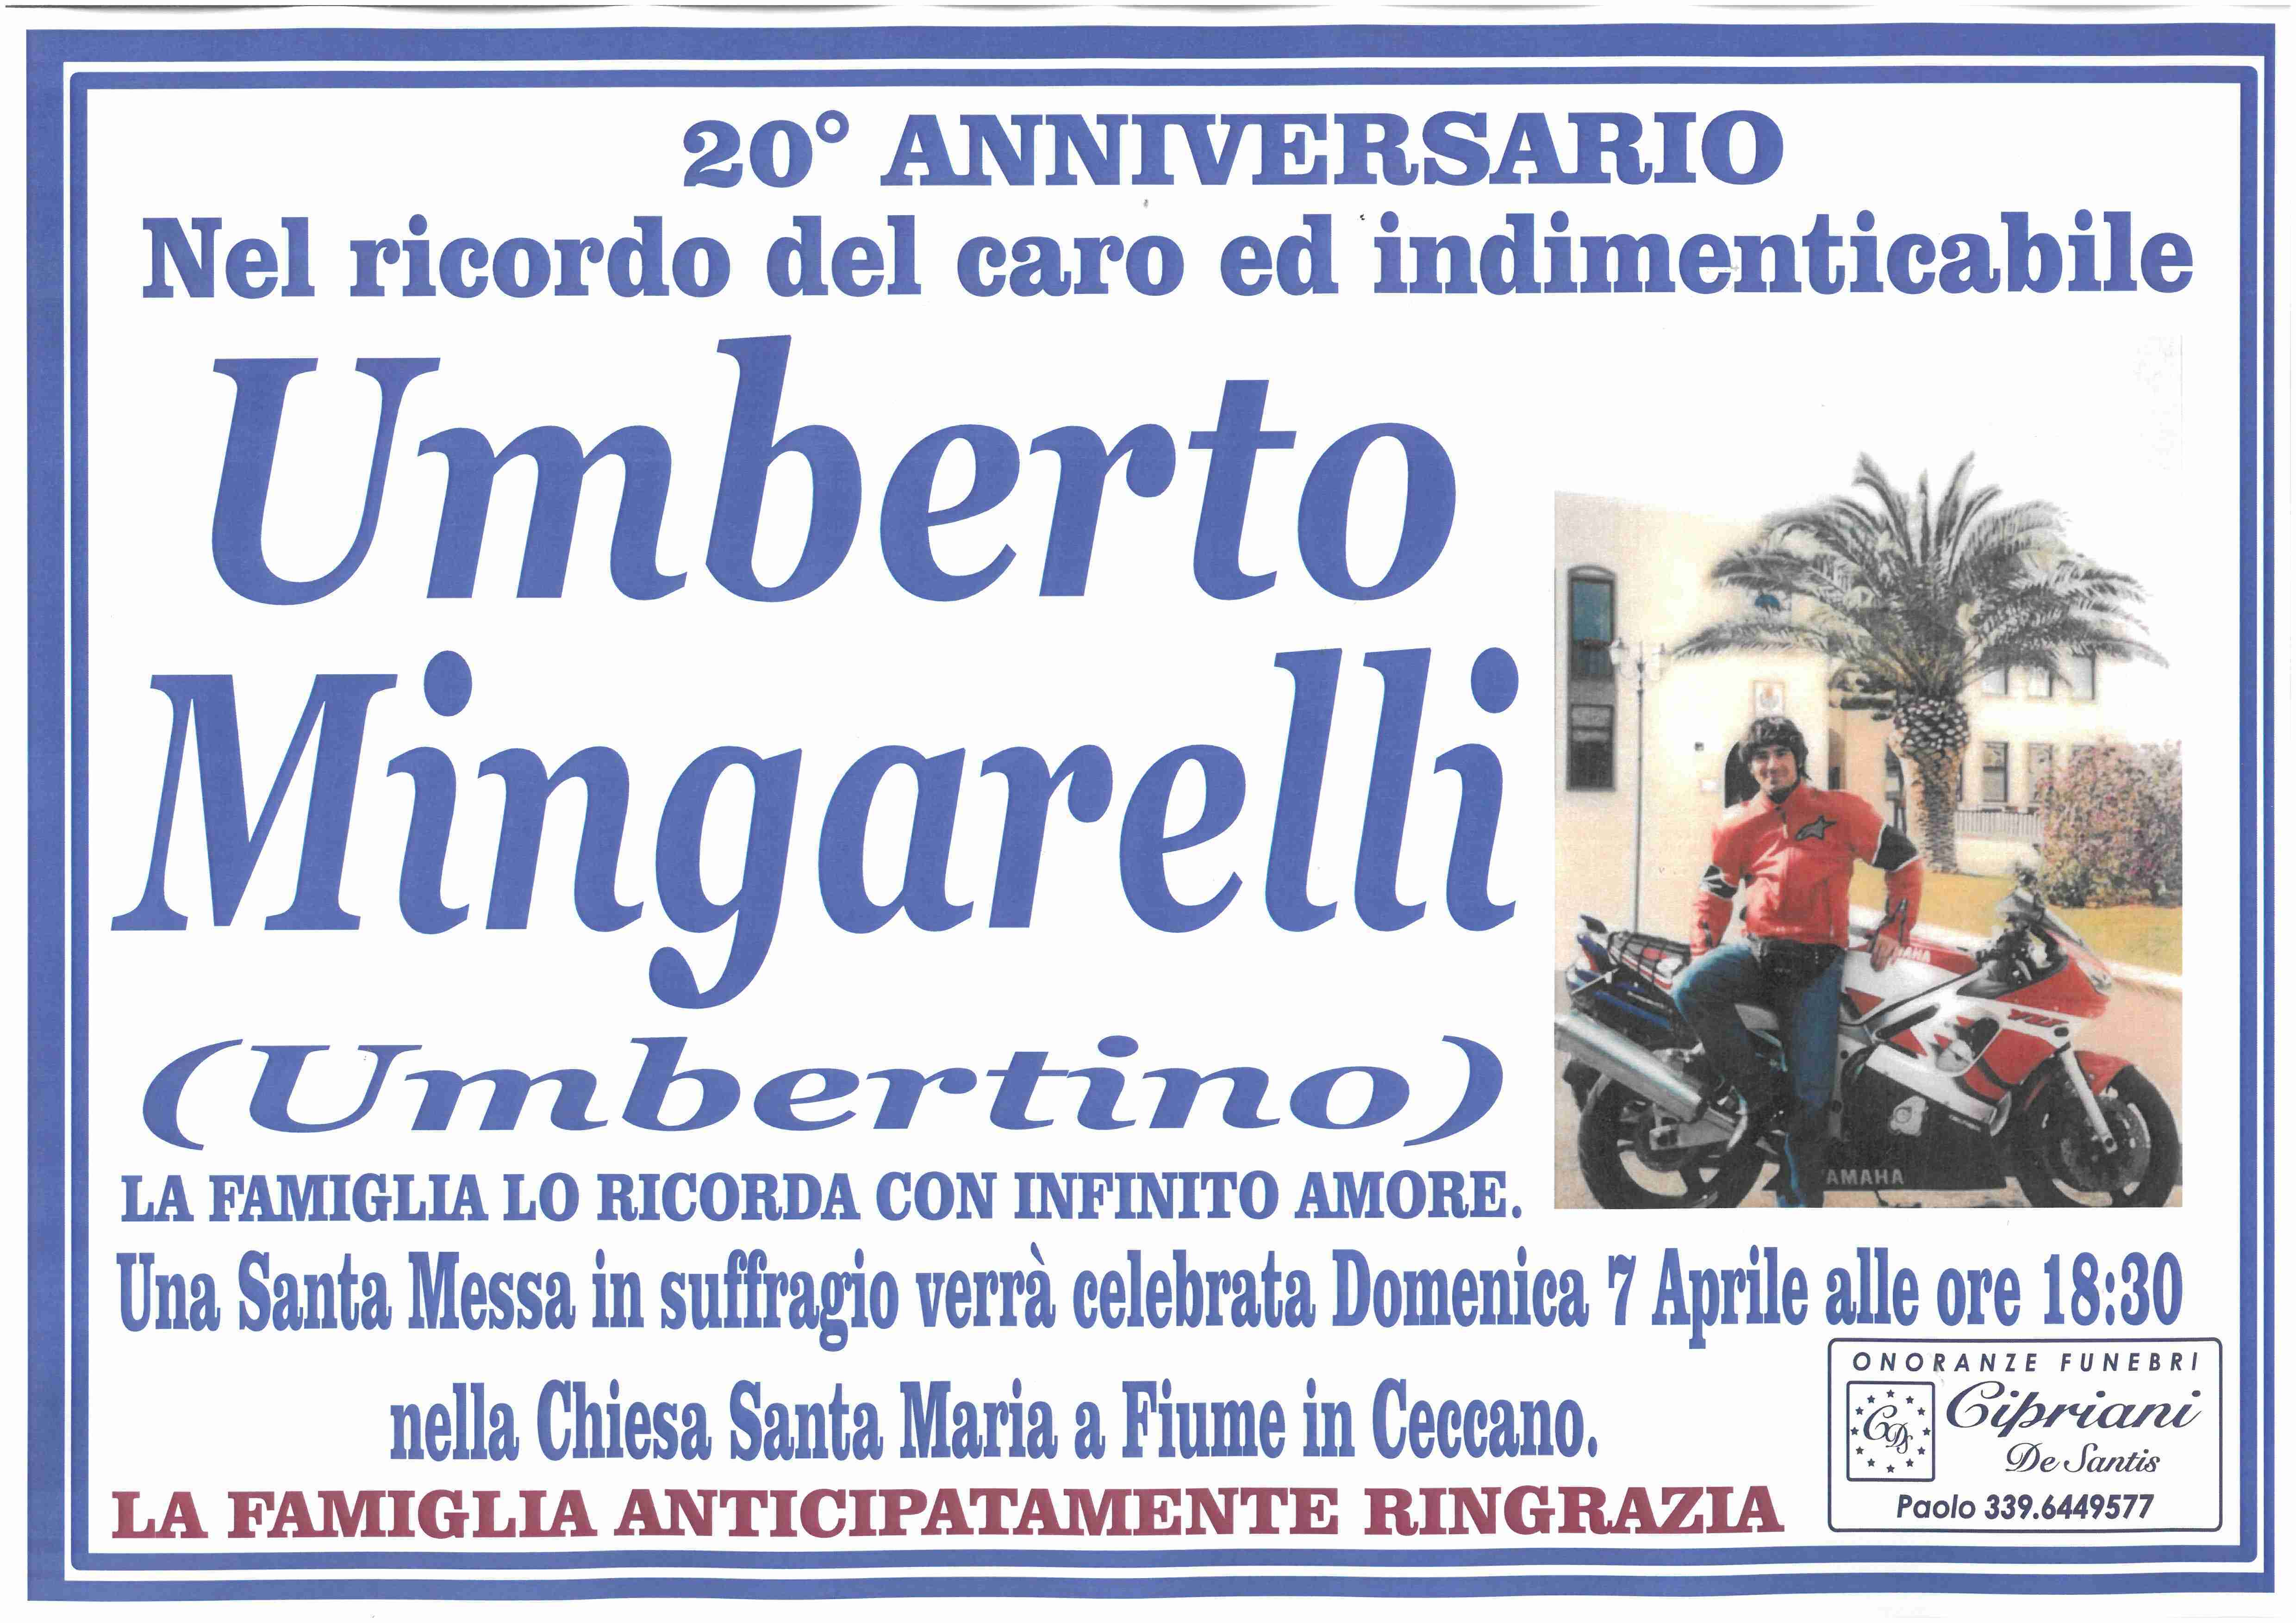 Umberto Mingarelli